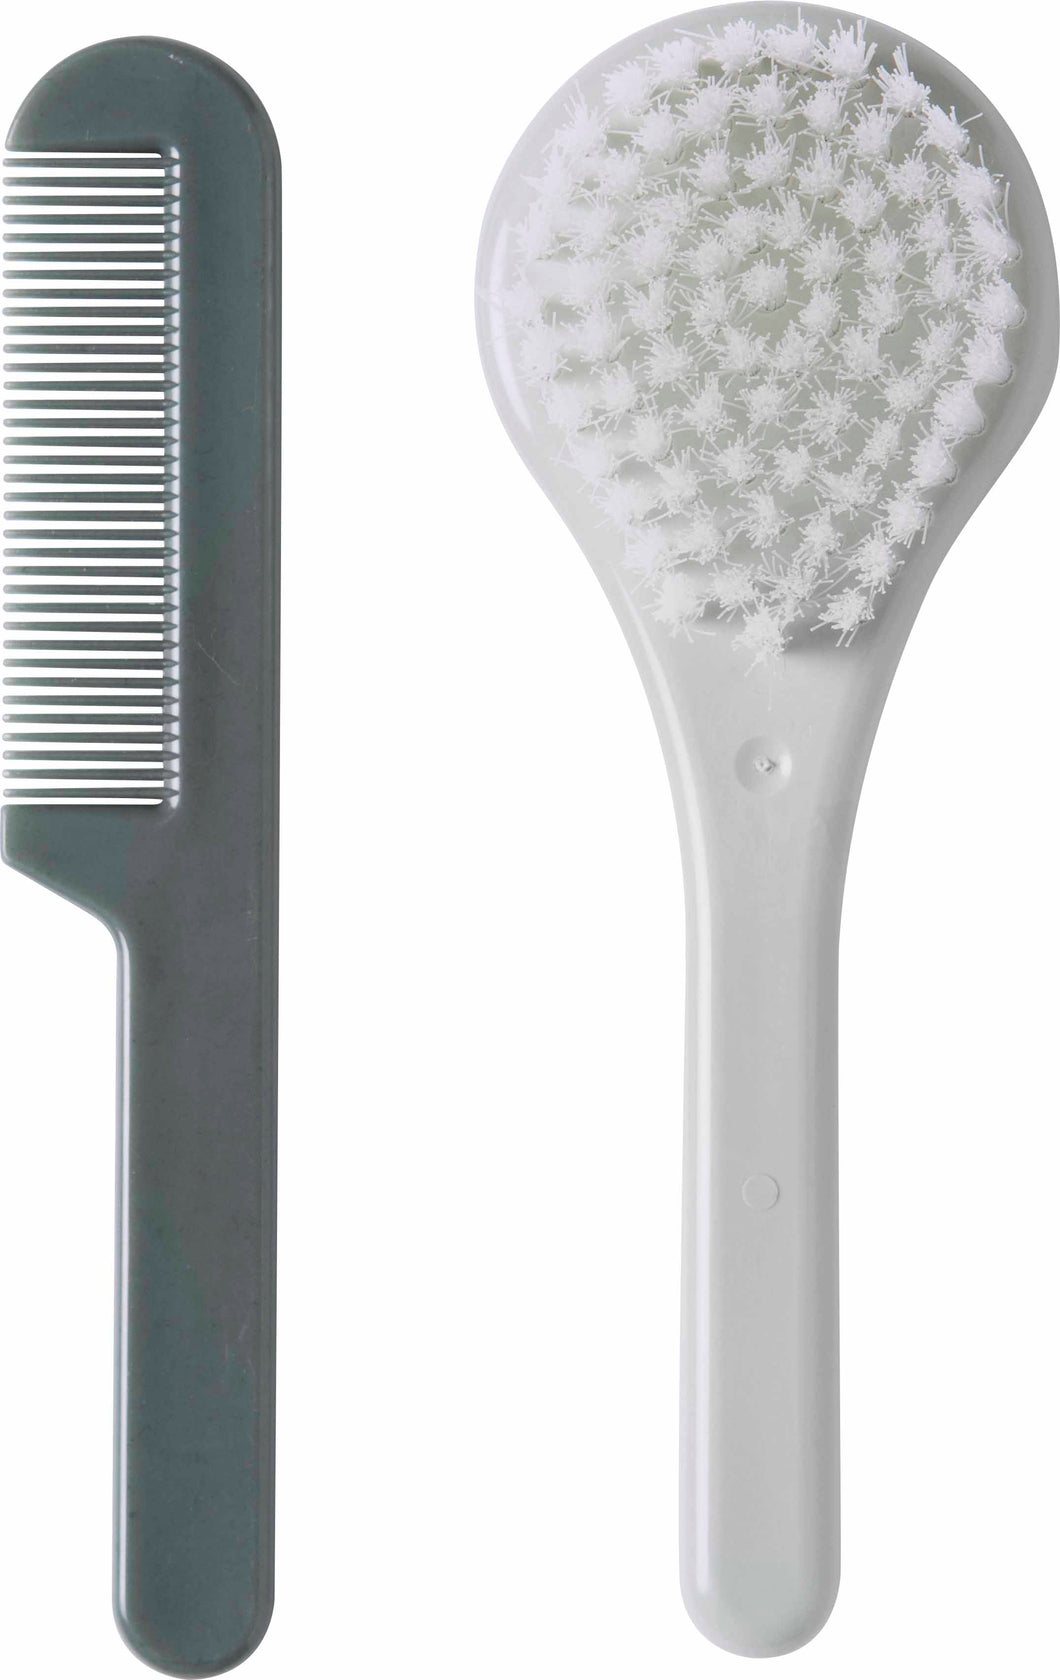 Brush & Comb Set Sage Green